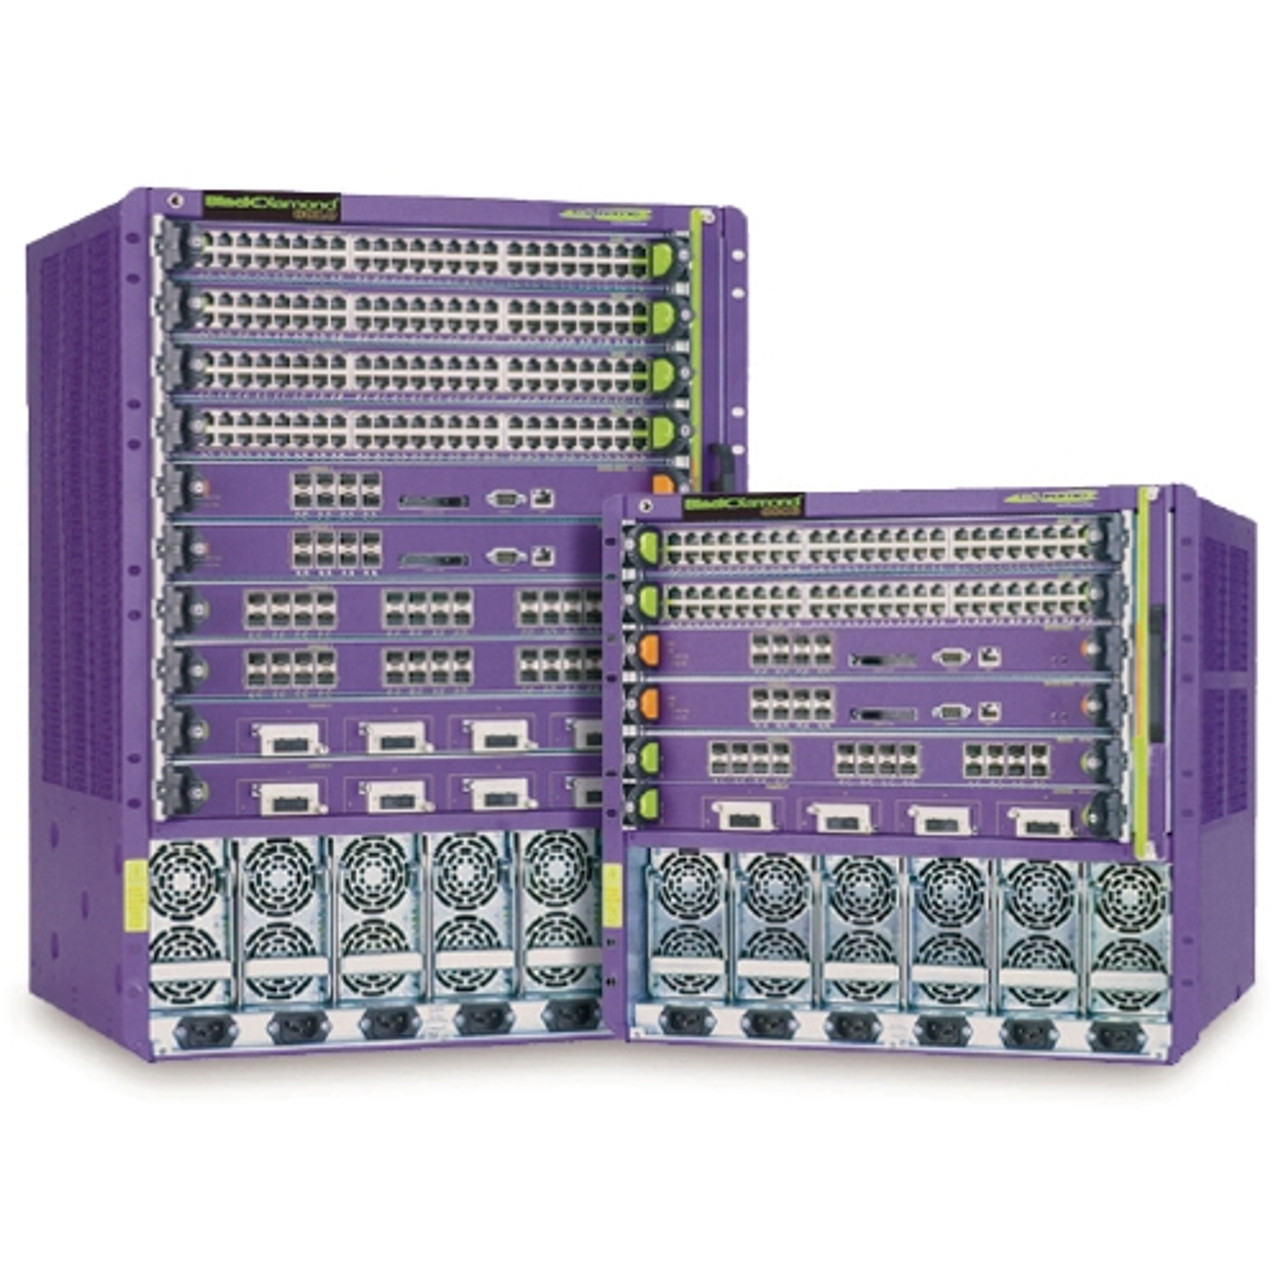 41516 Extreme Networks BlackDiamond 8800 48-Ports Expansion Module 48 x 10/100/1000Base-T LAN Expansion Module (Refurbished)